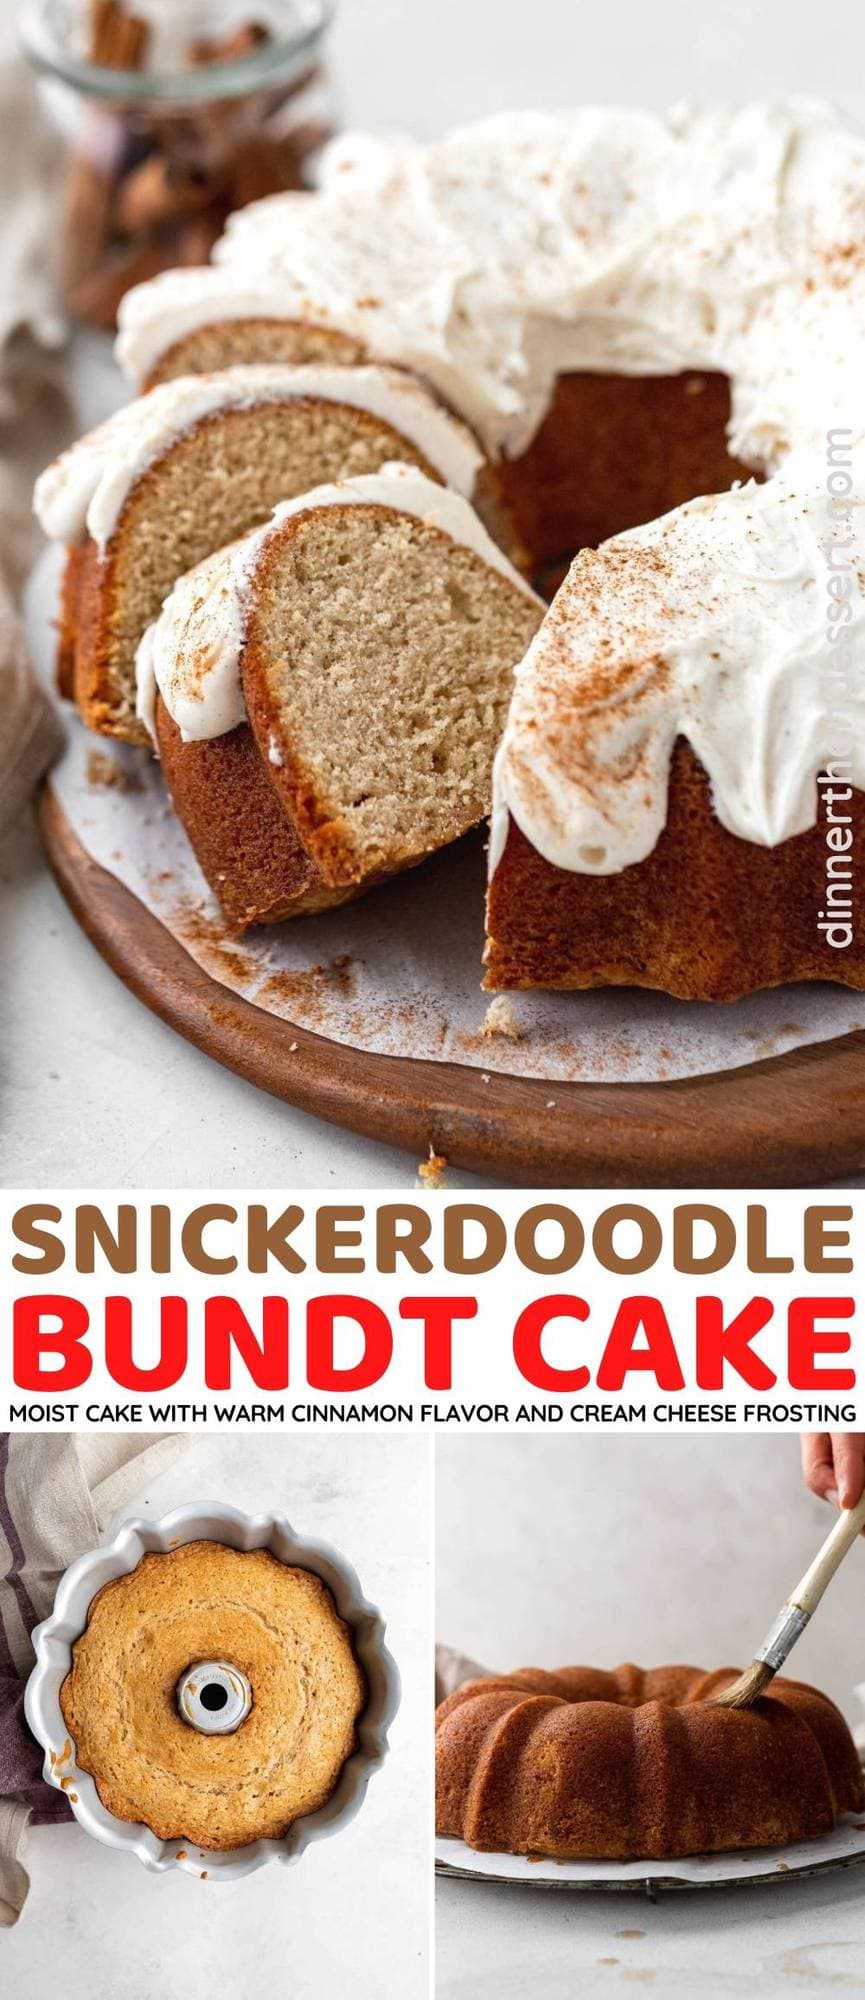 Snickerdoodle Bundt Cake collage